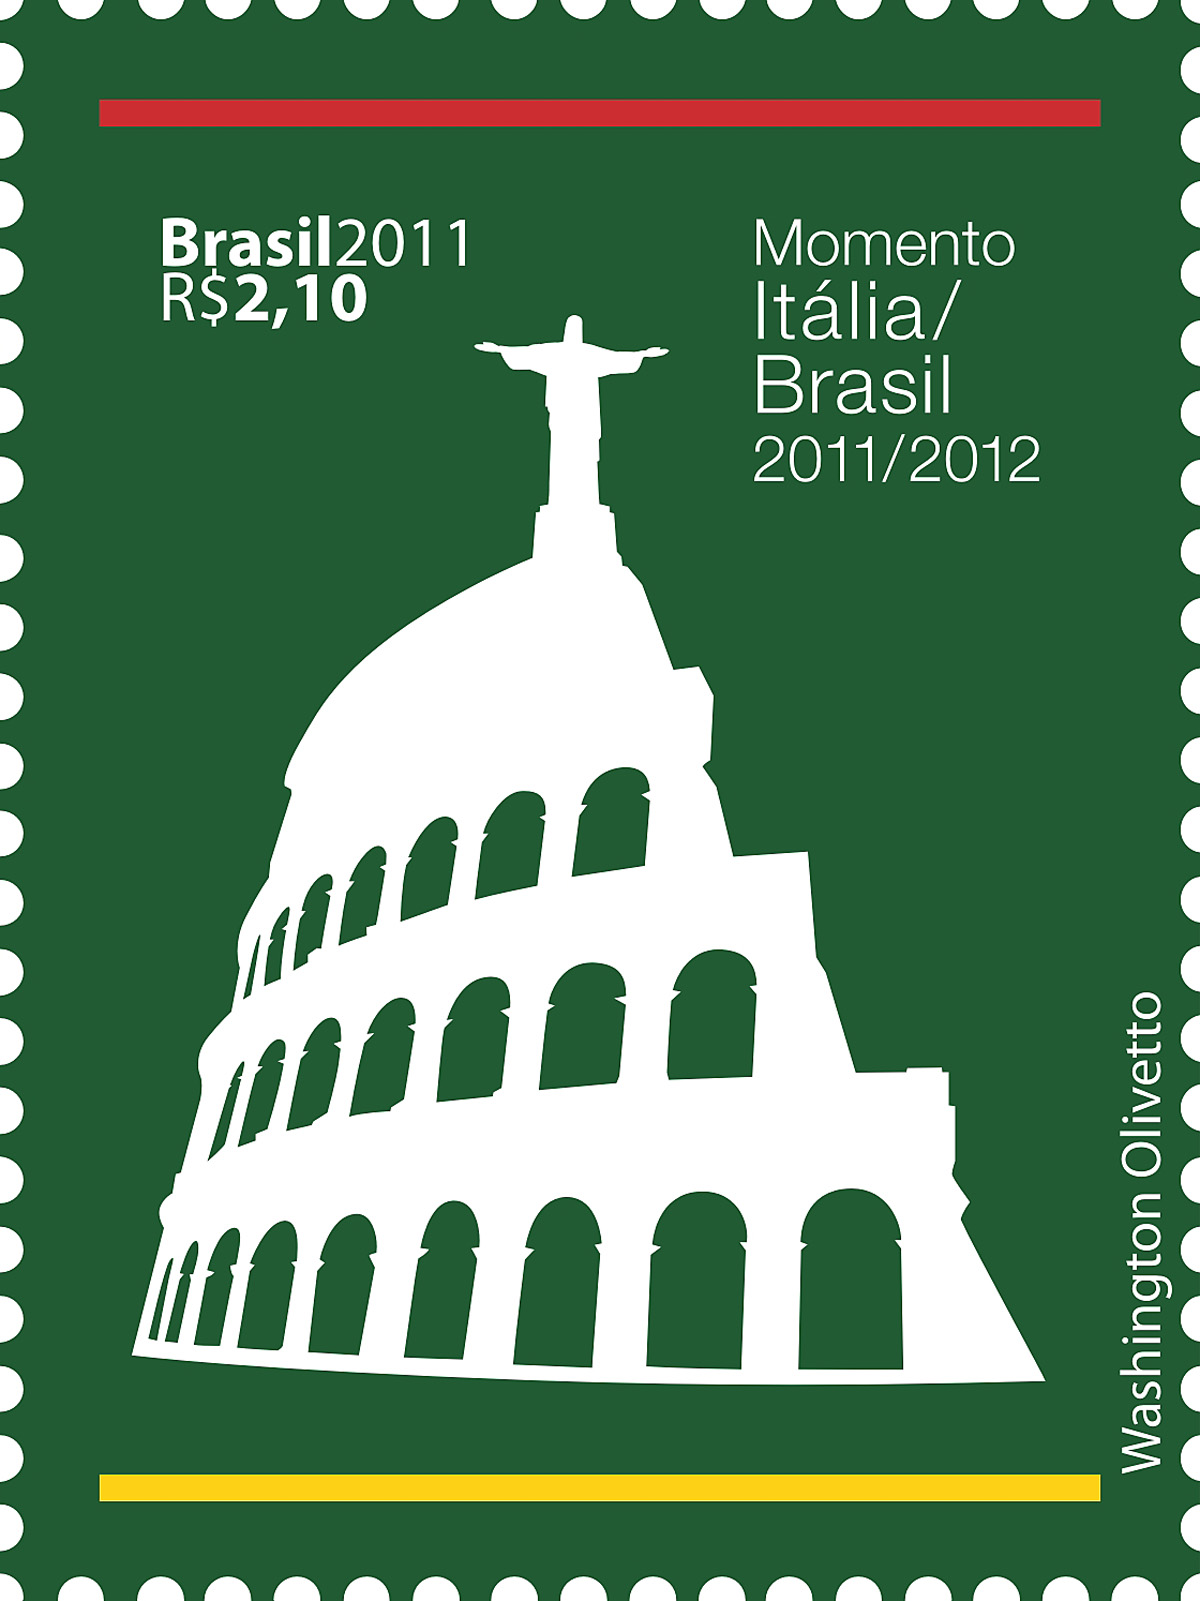 Momento Itlia Brasil 2011/2012 <a style='float:right;color:#ccc' href='https://www3.al.sp.gov.br/repositorio/noticia/N-06-2012/fg115571.jpg' target=_blank><i class='bi bi-zoom-in'></i> Clique para ver a imagem </a>